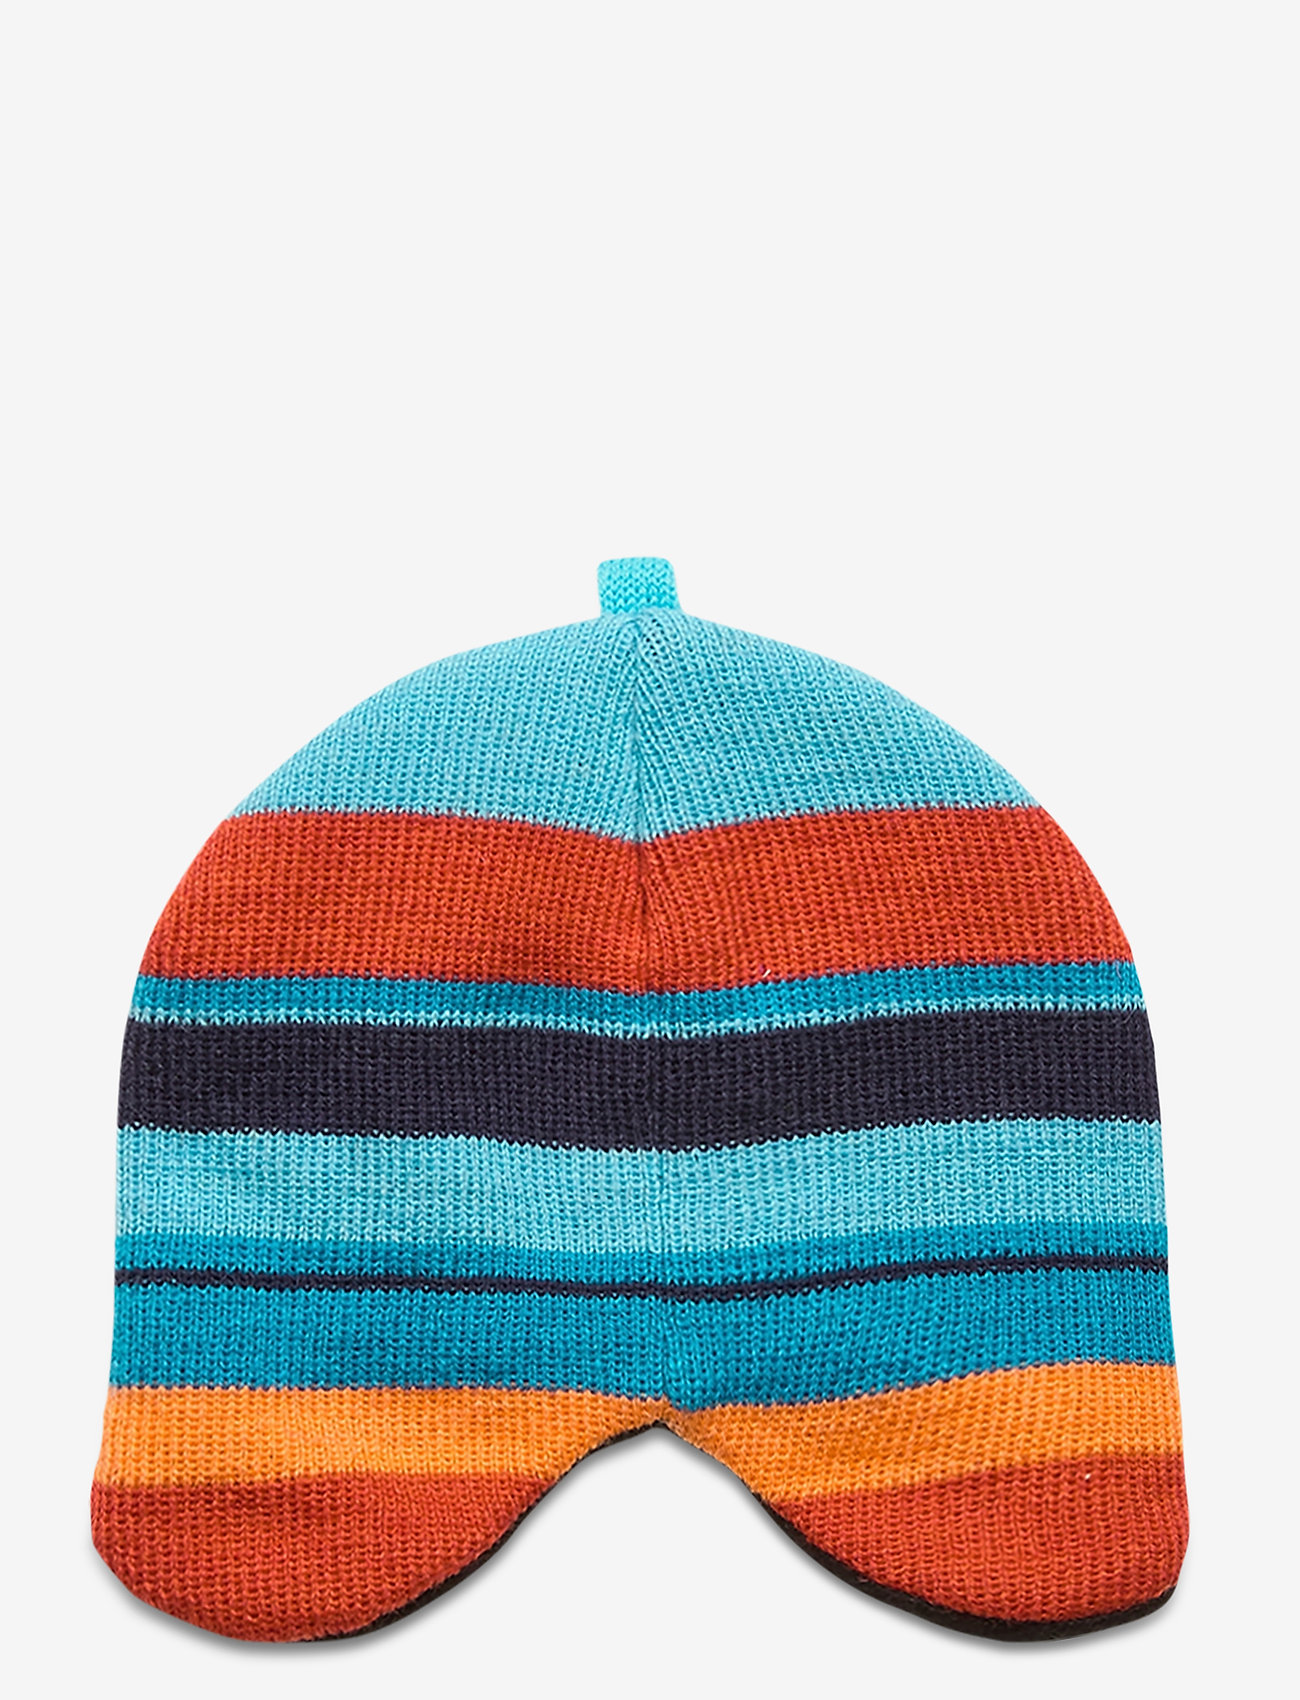 ISBJÖRN of Sweden - EAGLET Knitted Cap - laagste prijzen - sunset - 1